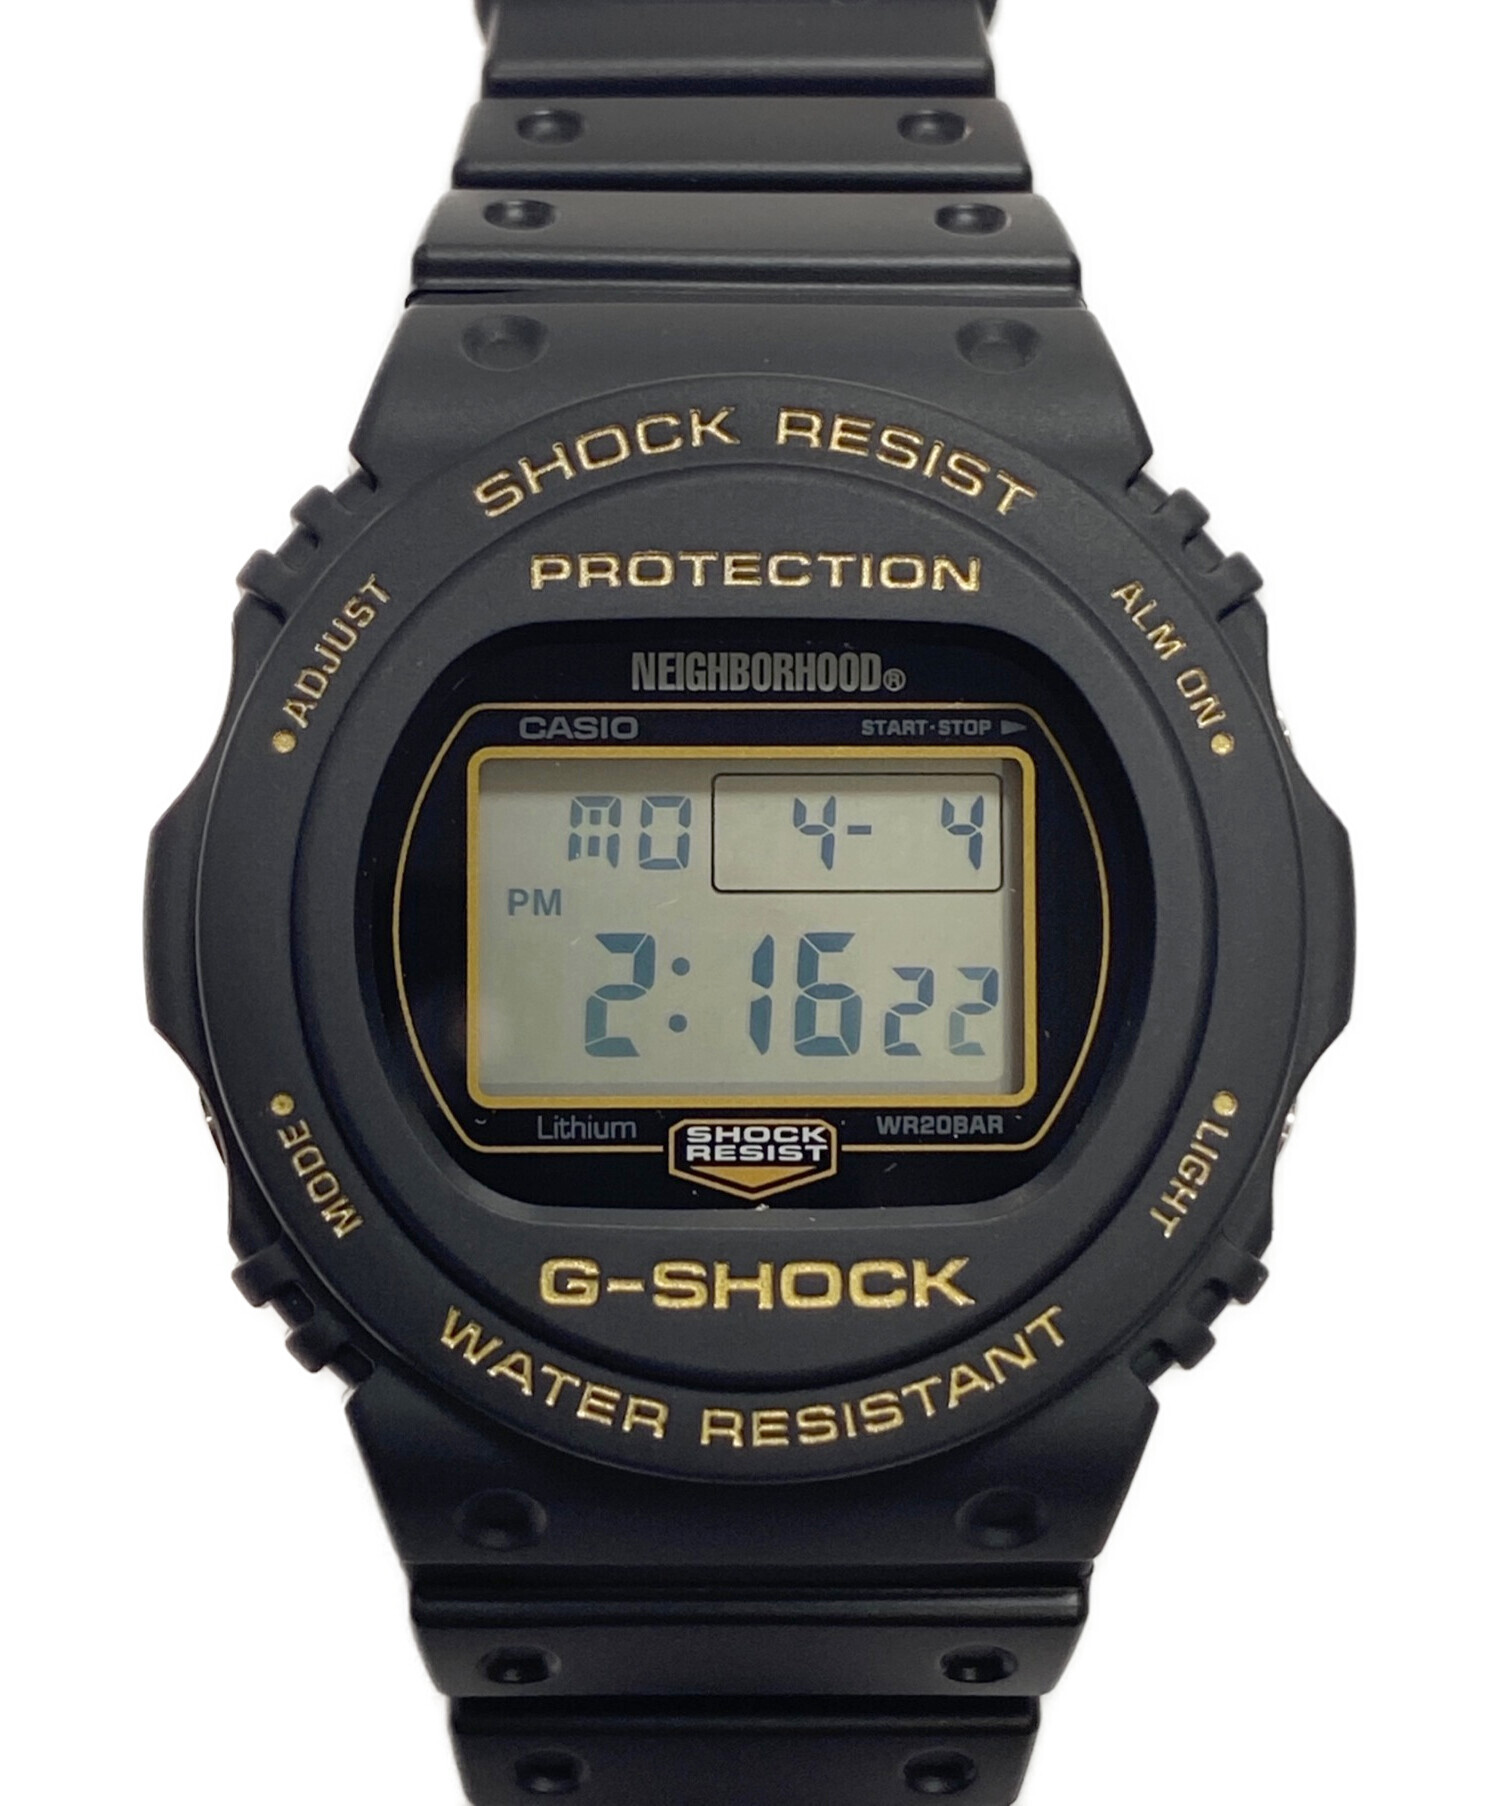 G-SHOCK DW-5750E ネイバーフッドコラボ NEIGHBORHOOD-